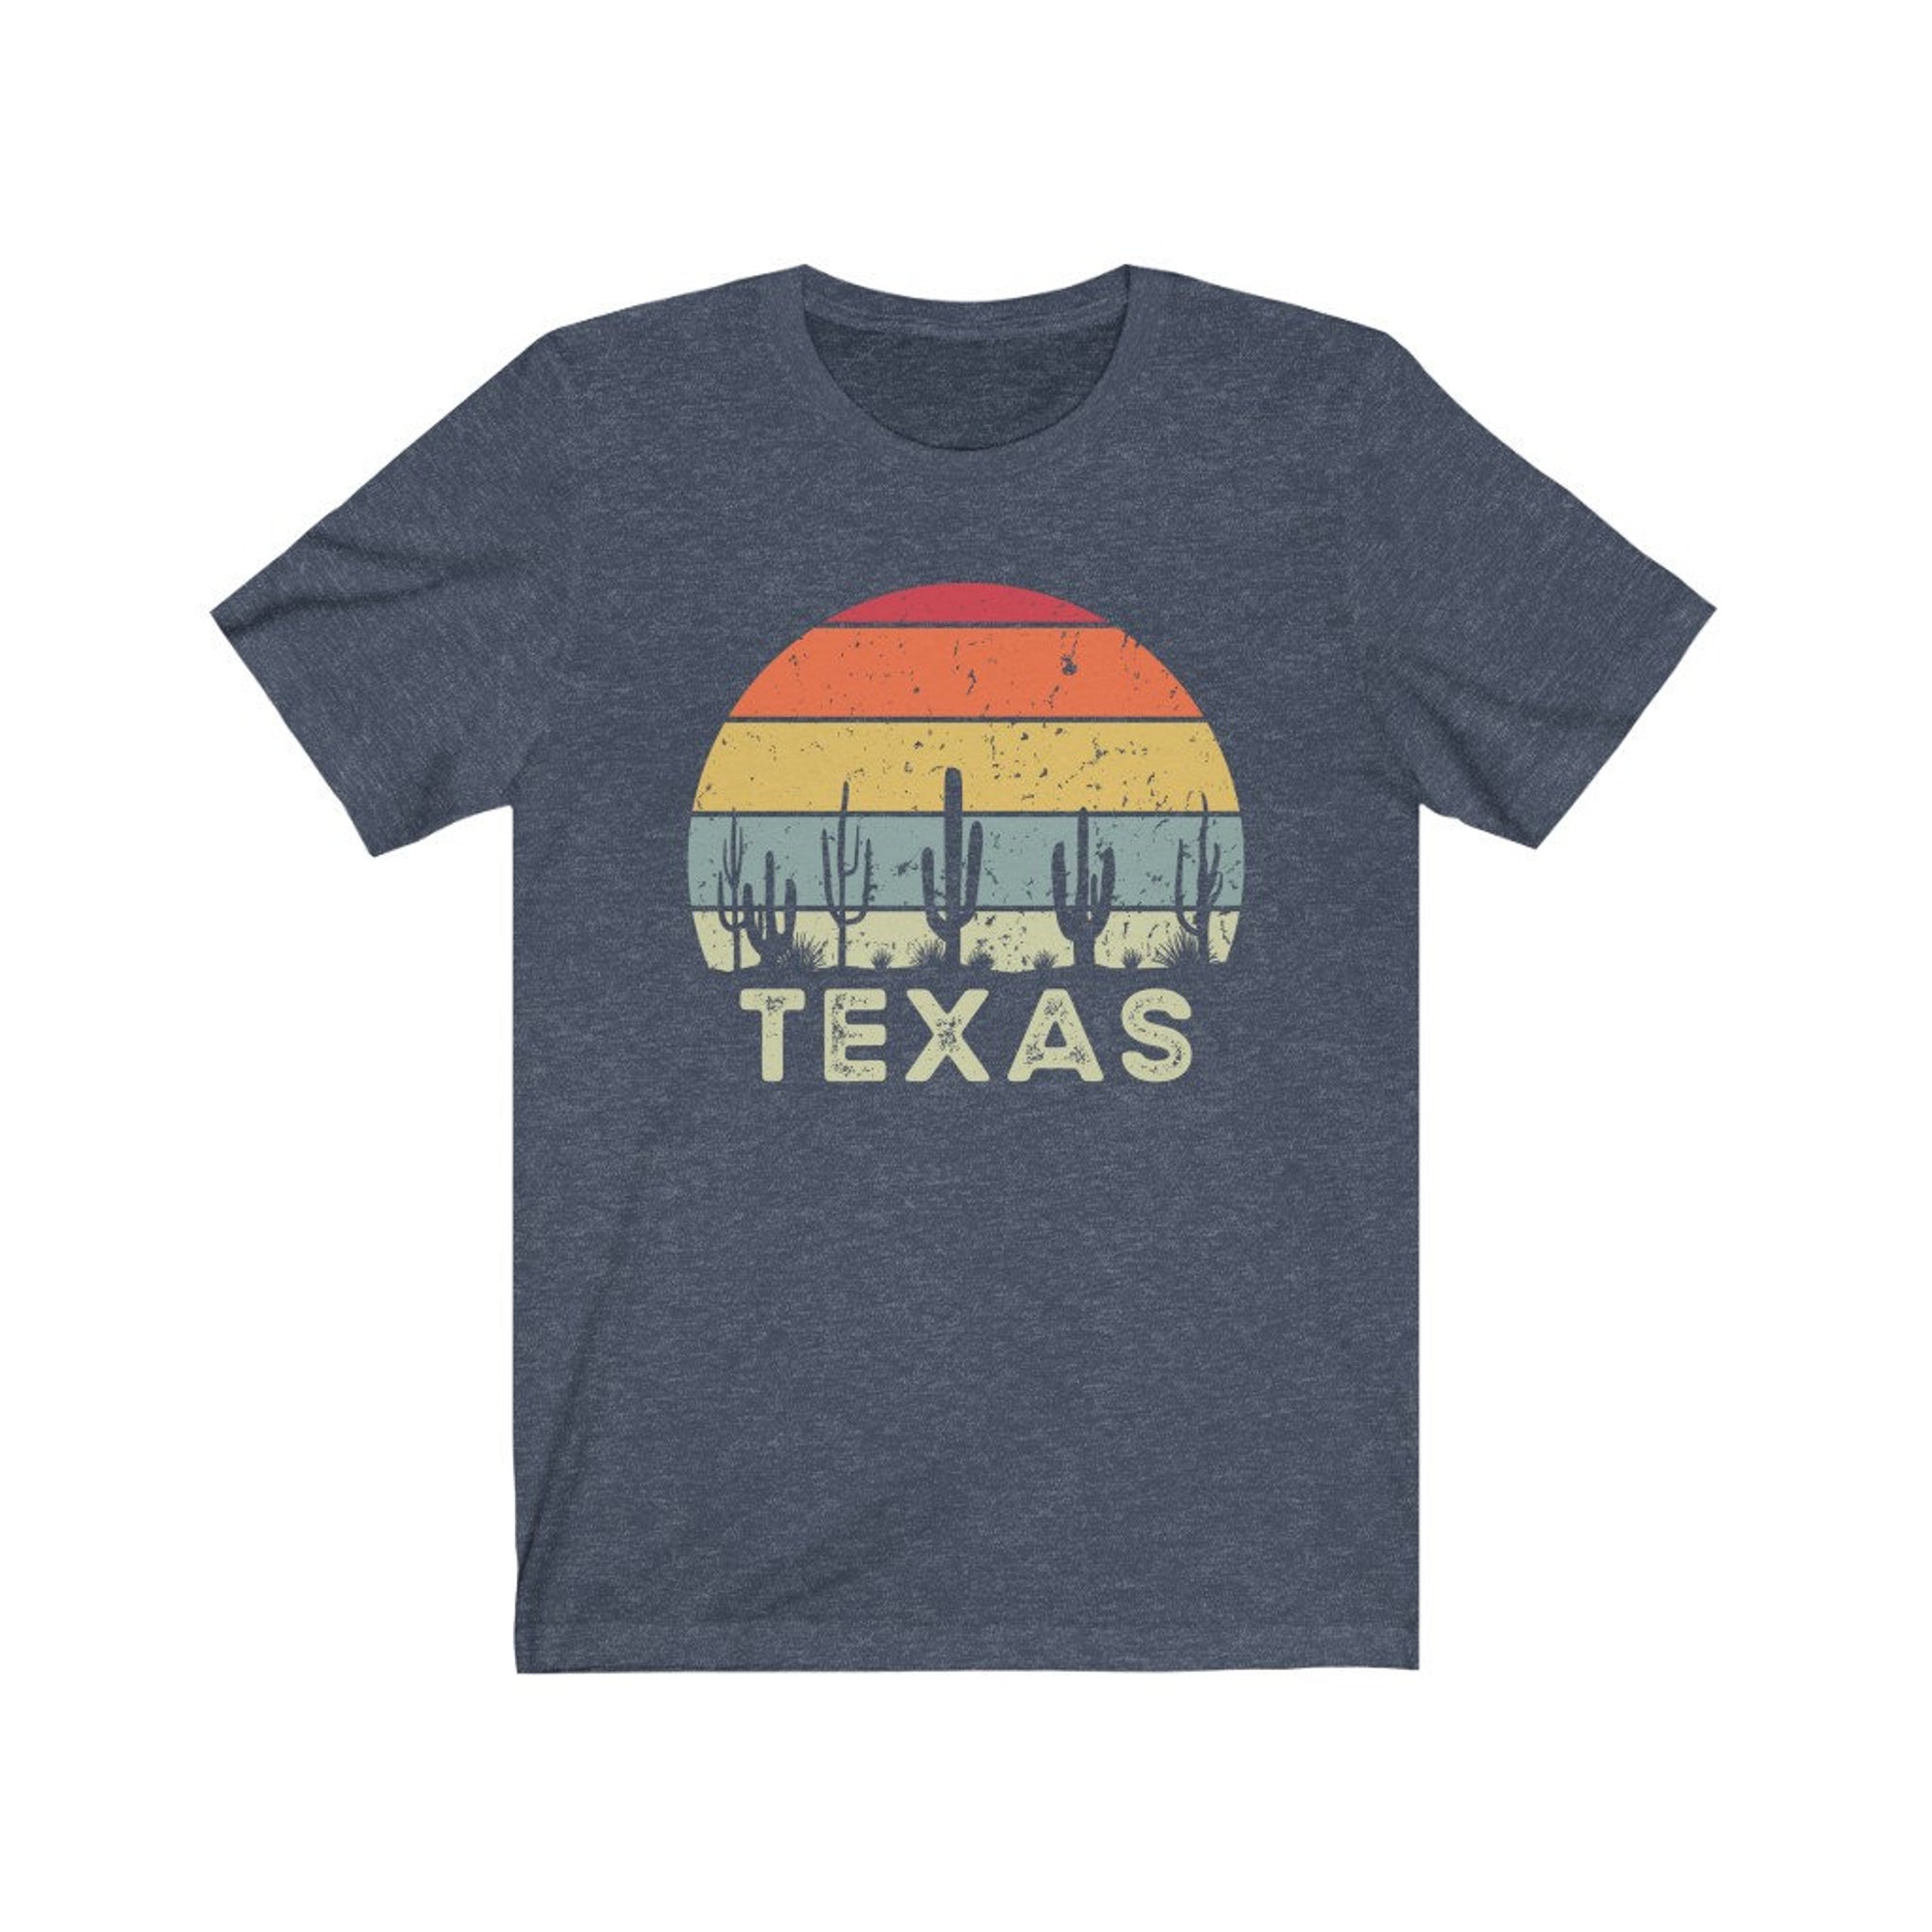 Discover Texas Shirt, Retro Vintage Texas, Cactus Shirt, Texas Graphic Tee, Retro Country Shirt, Gift for Texas Lover, Texas Cactus Shirt, Texas Home